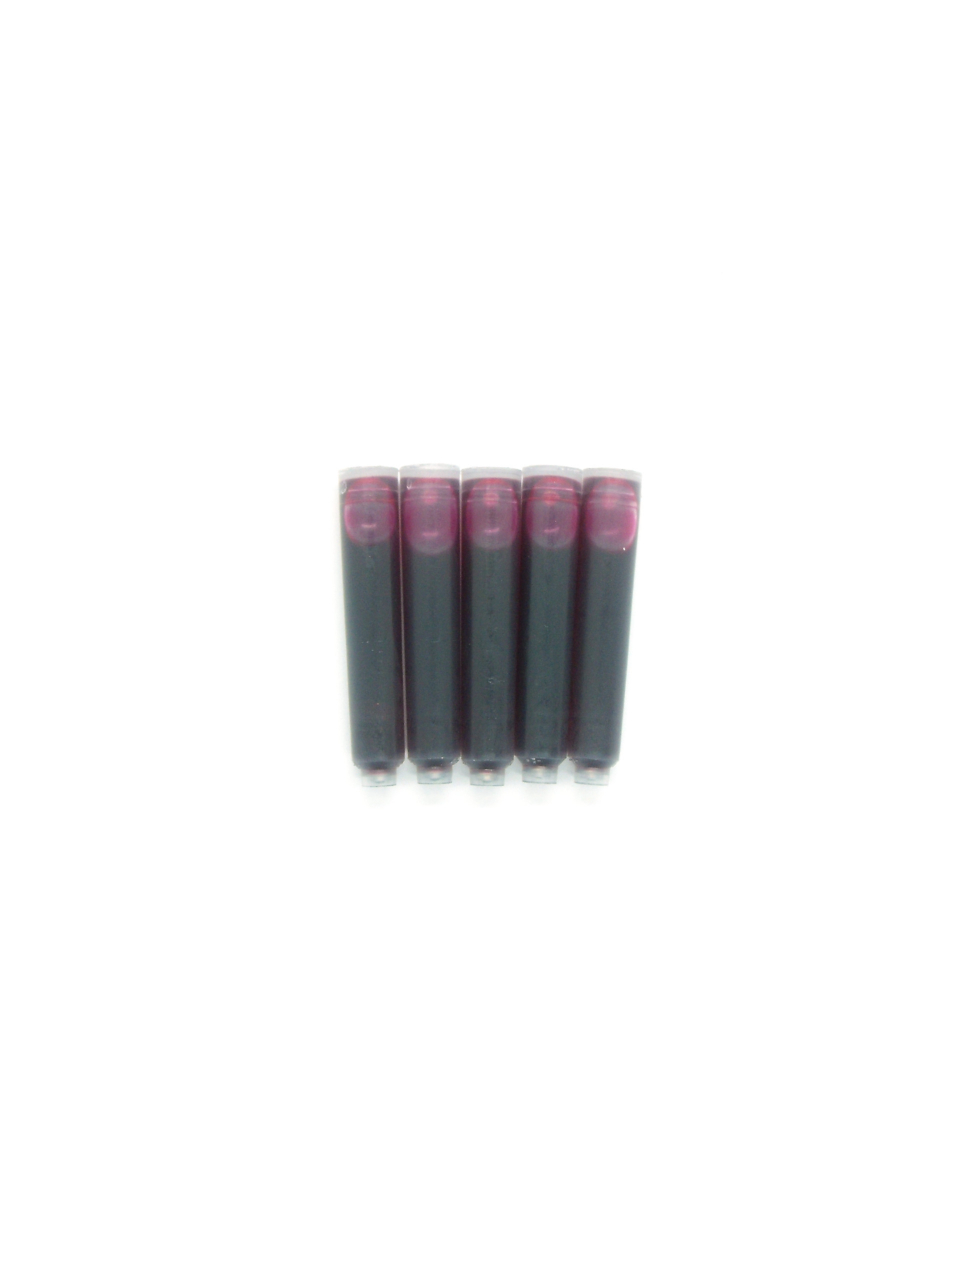 PenConverter Ink Cartridges For Karas Kustoms Fountain Pens (Pink)